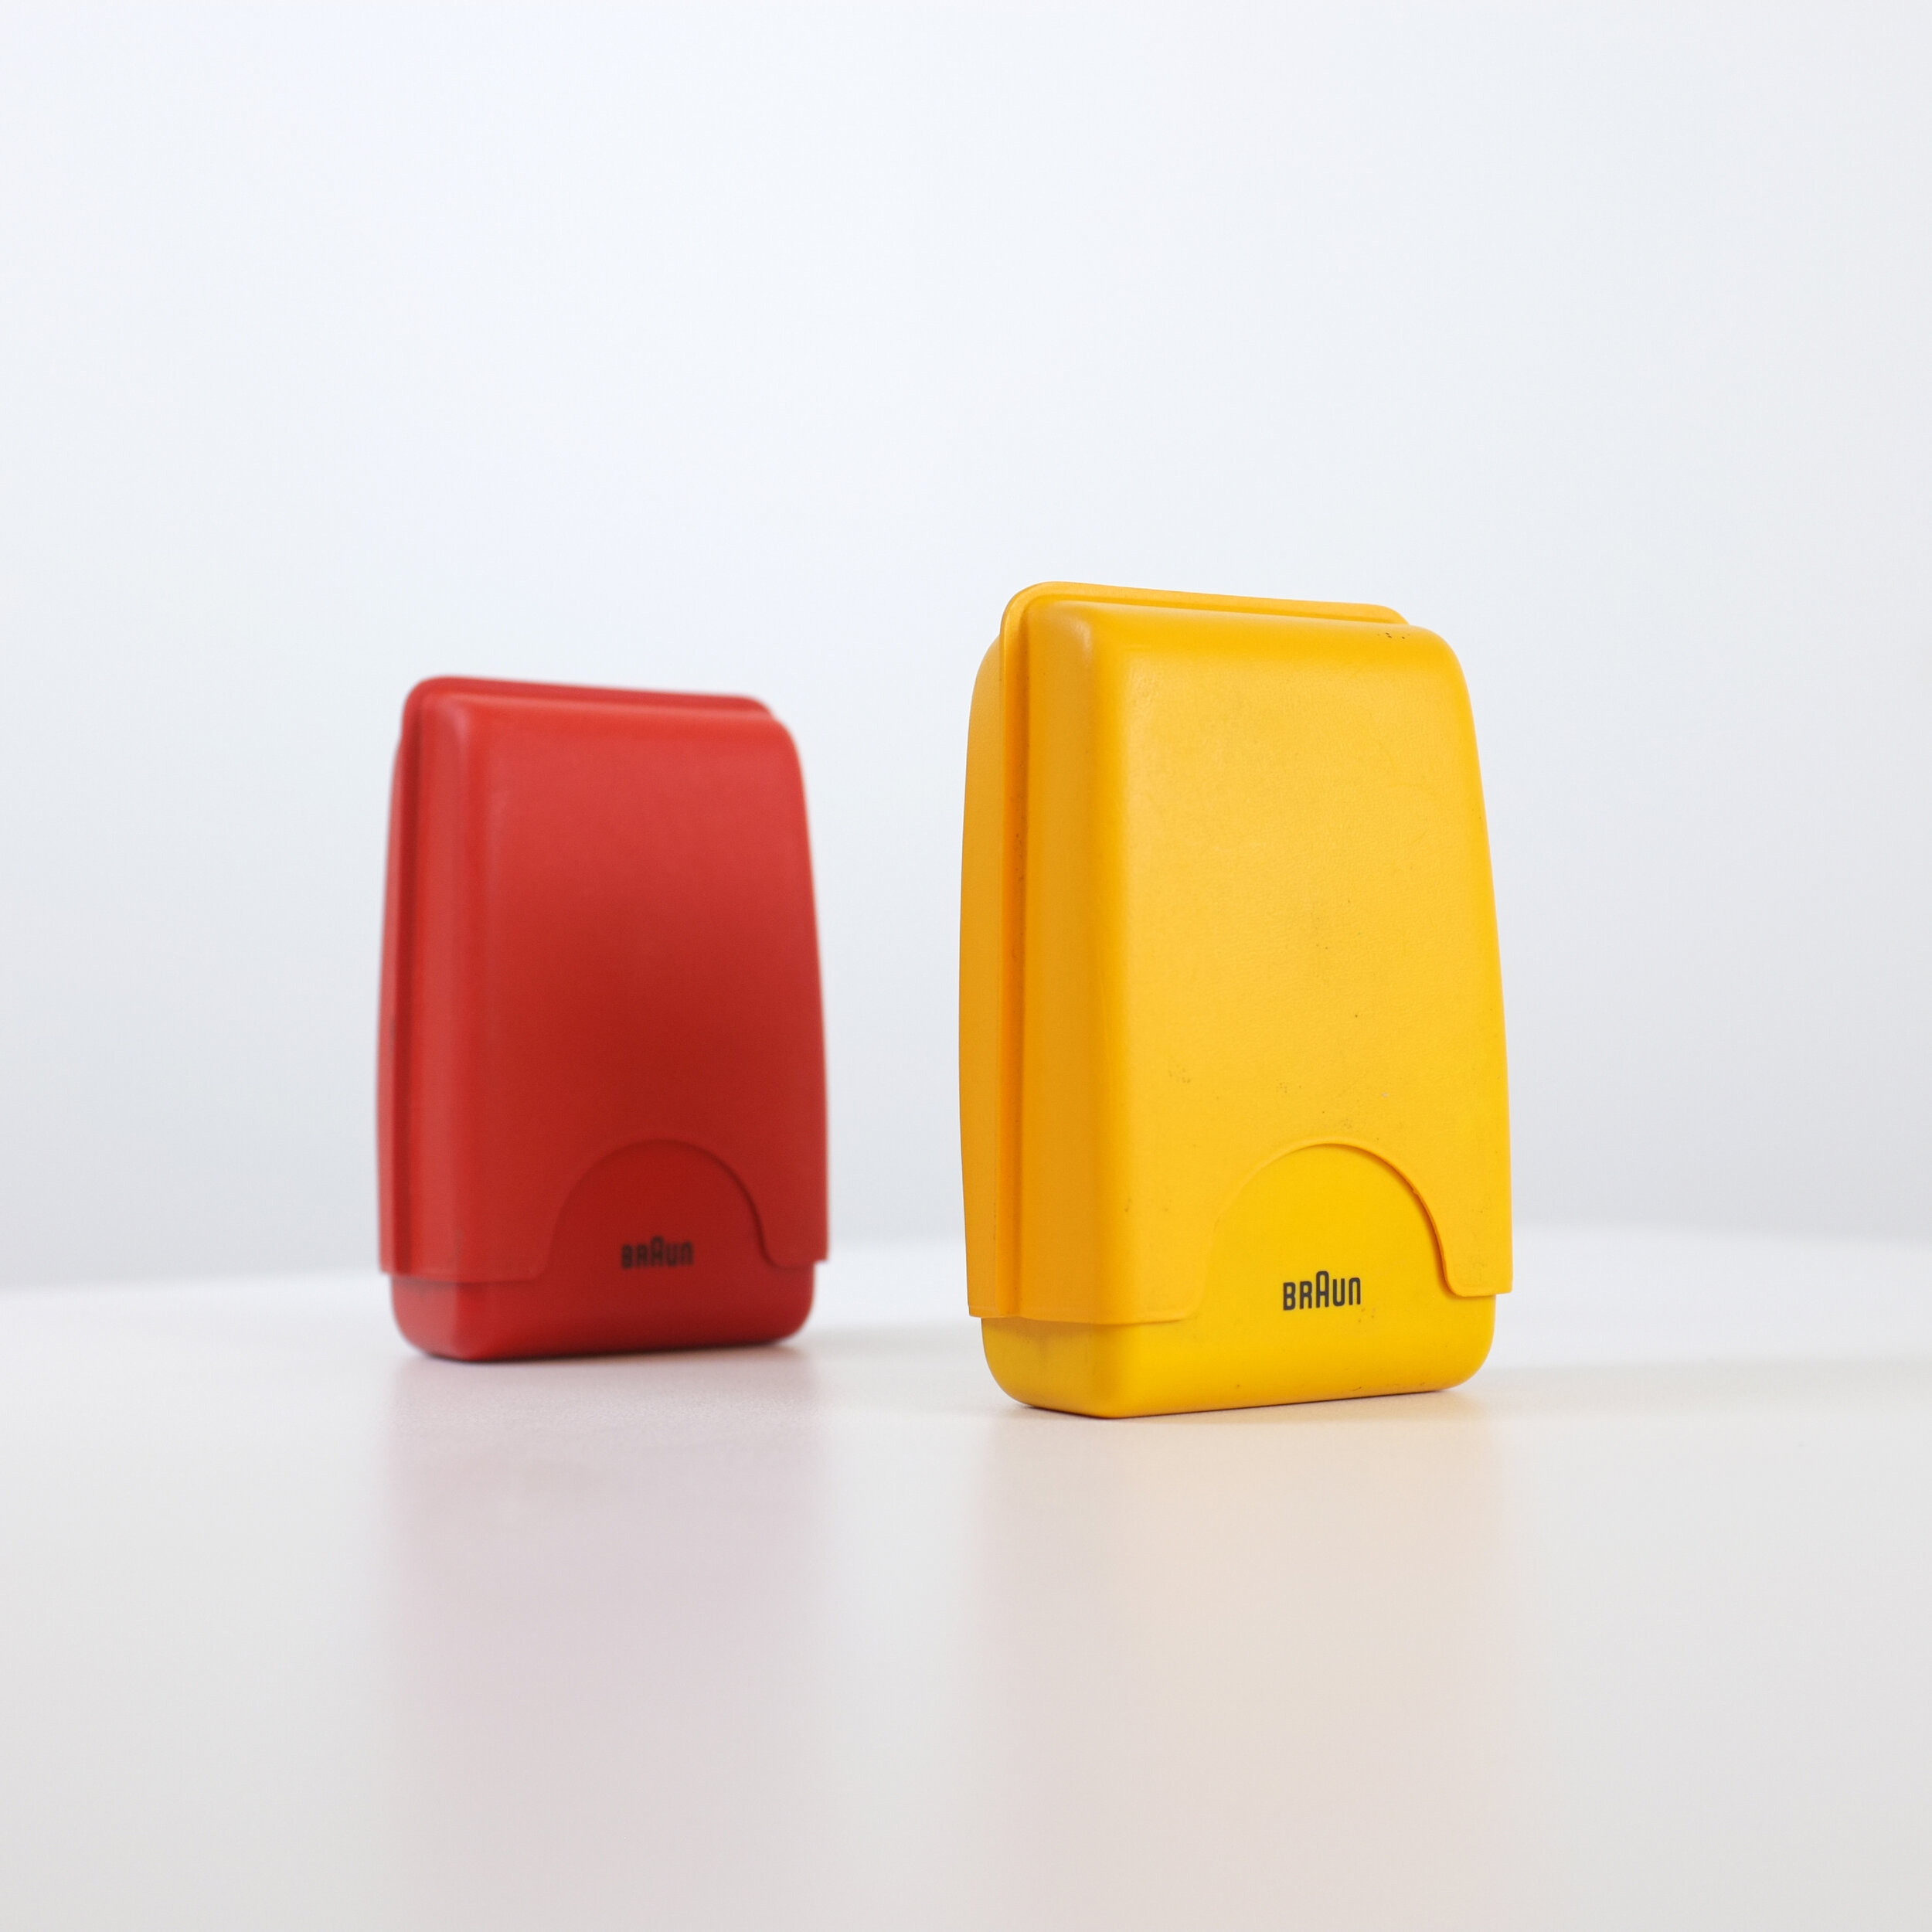 Harman Kardon's new Bluetooth speakers bring back a Jony Ive design icon,  with a twist